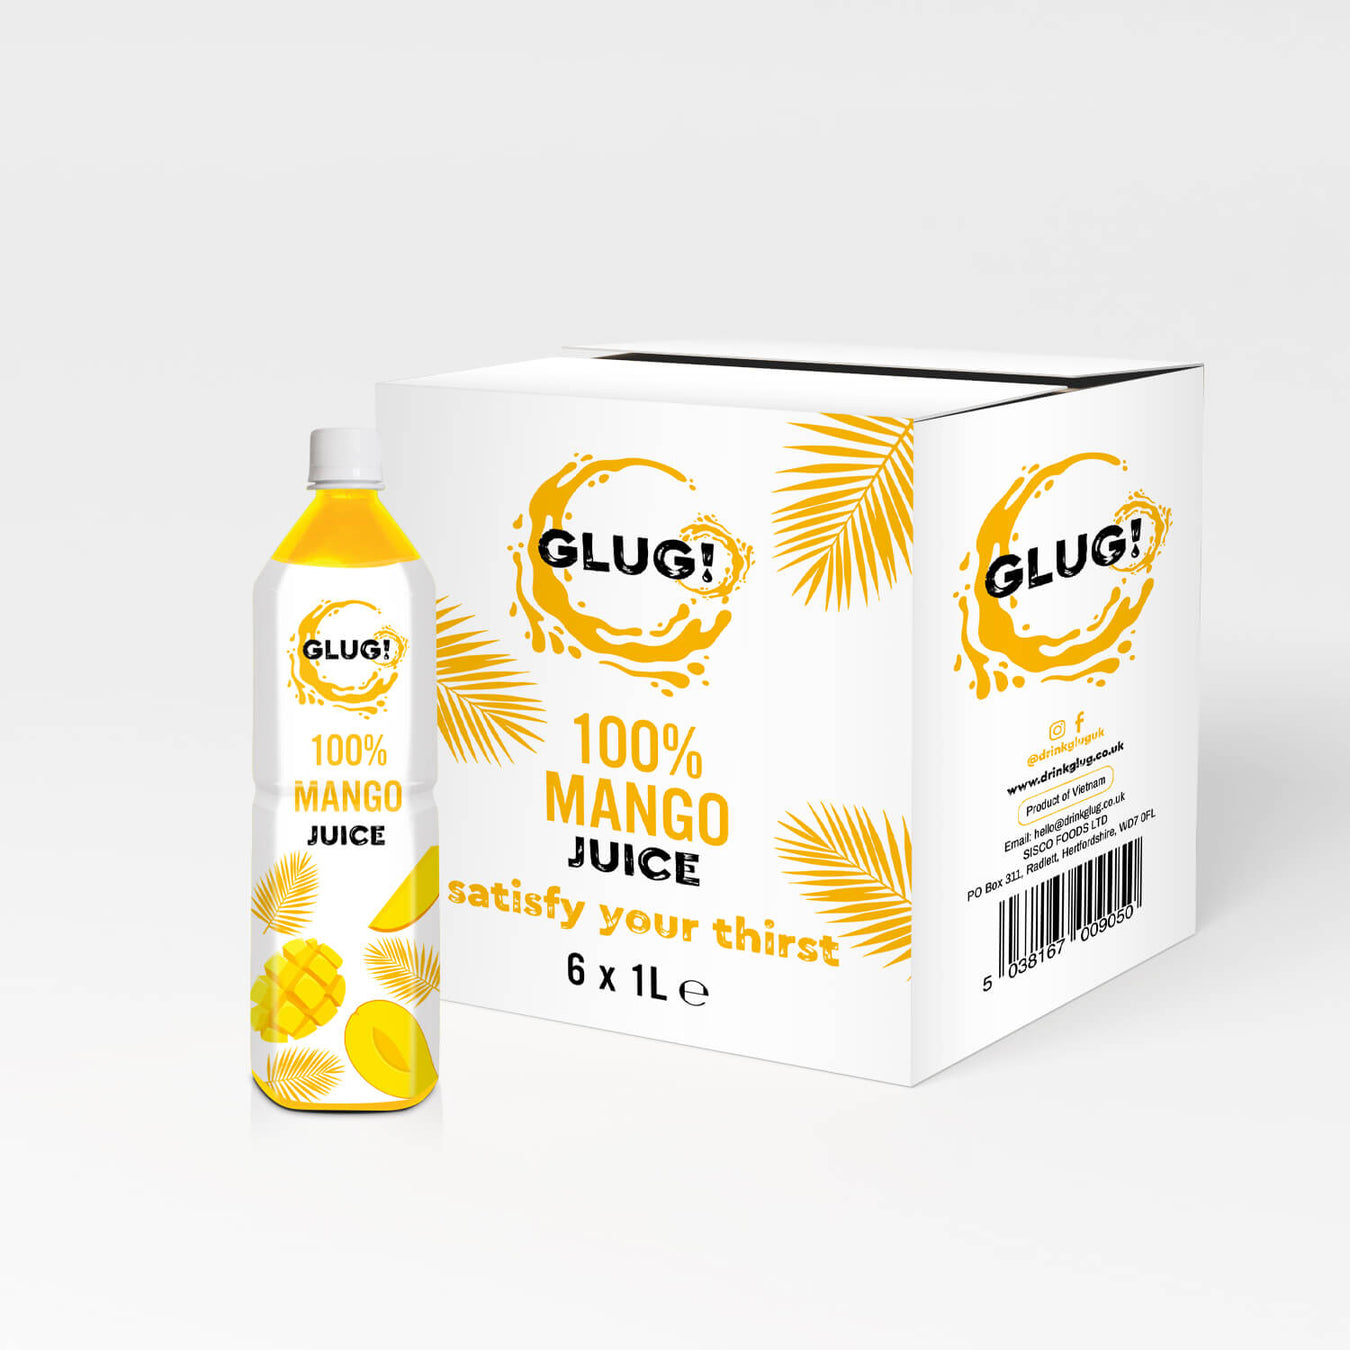 Glug! 100% Mango Juice 6 x 1L